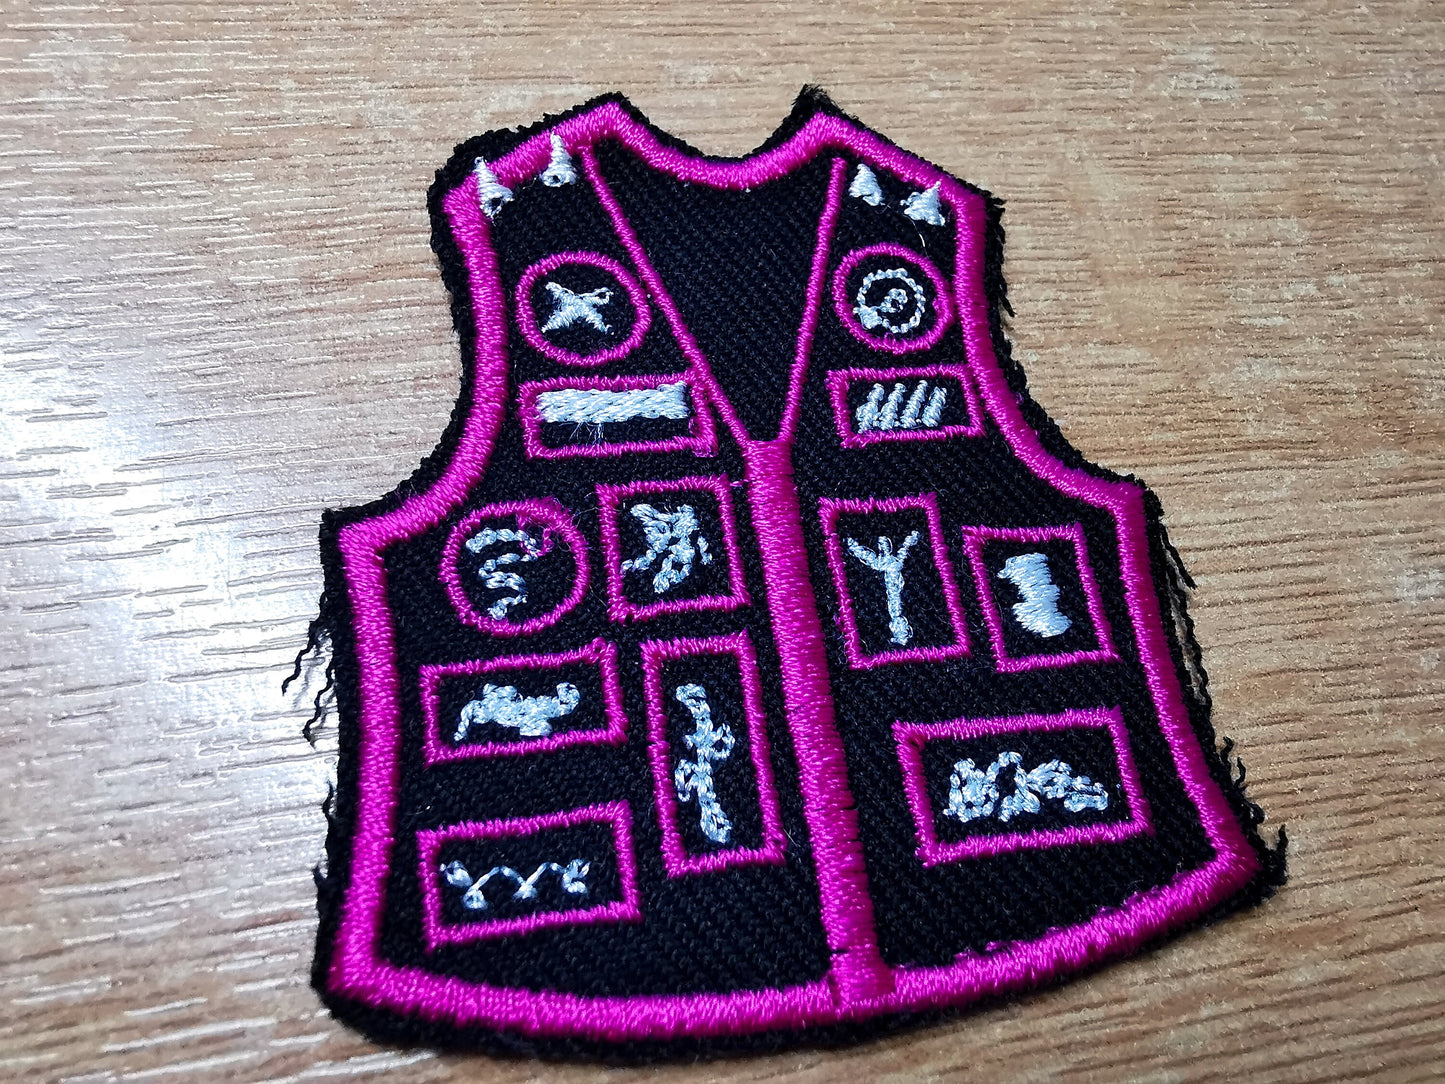 Battle Jacket Embroidered Patch Jacket Parody Death Metal Black Metal Patch Thrash Metal Viking Bright Vibrant Pink